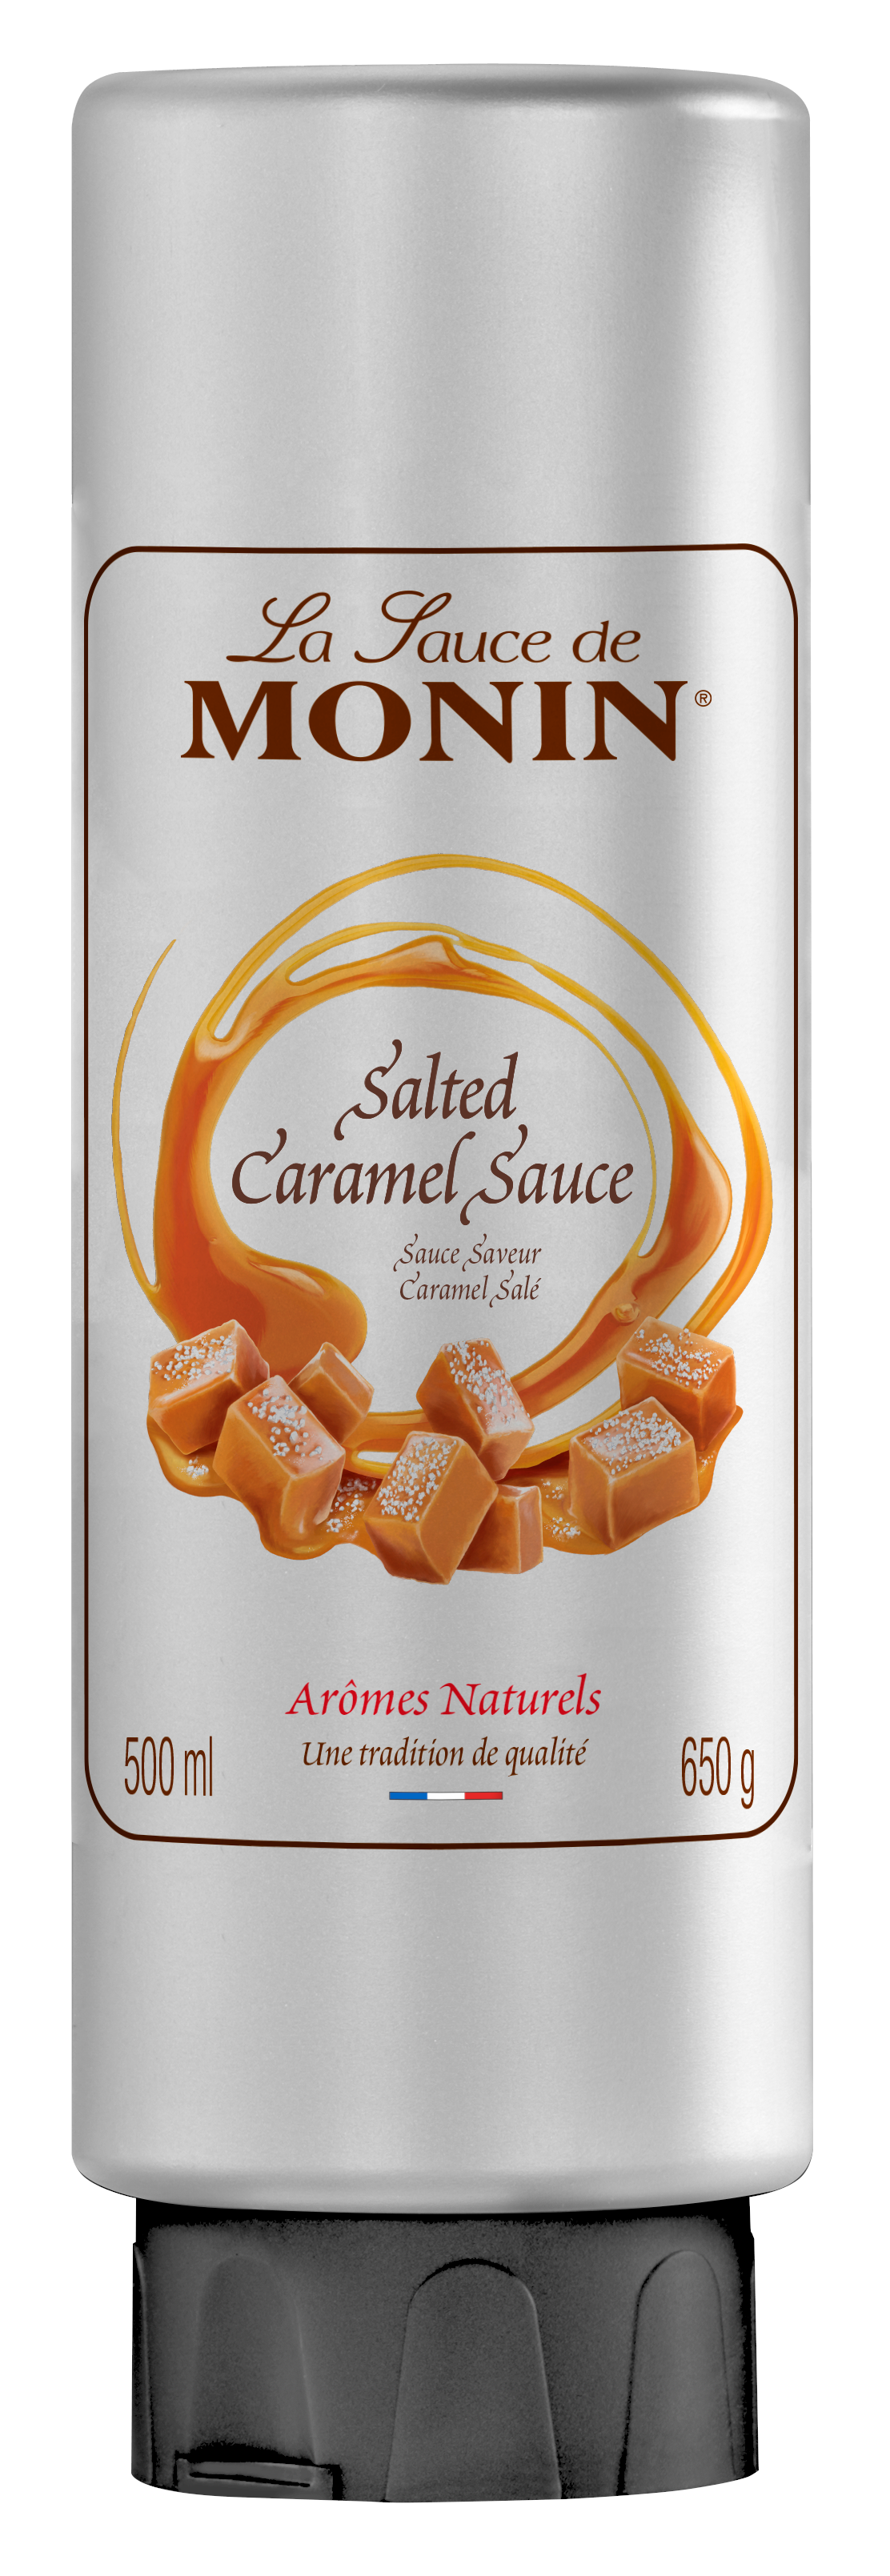 MONIN Caramel Sauce 1.89L